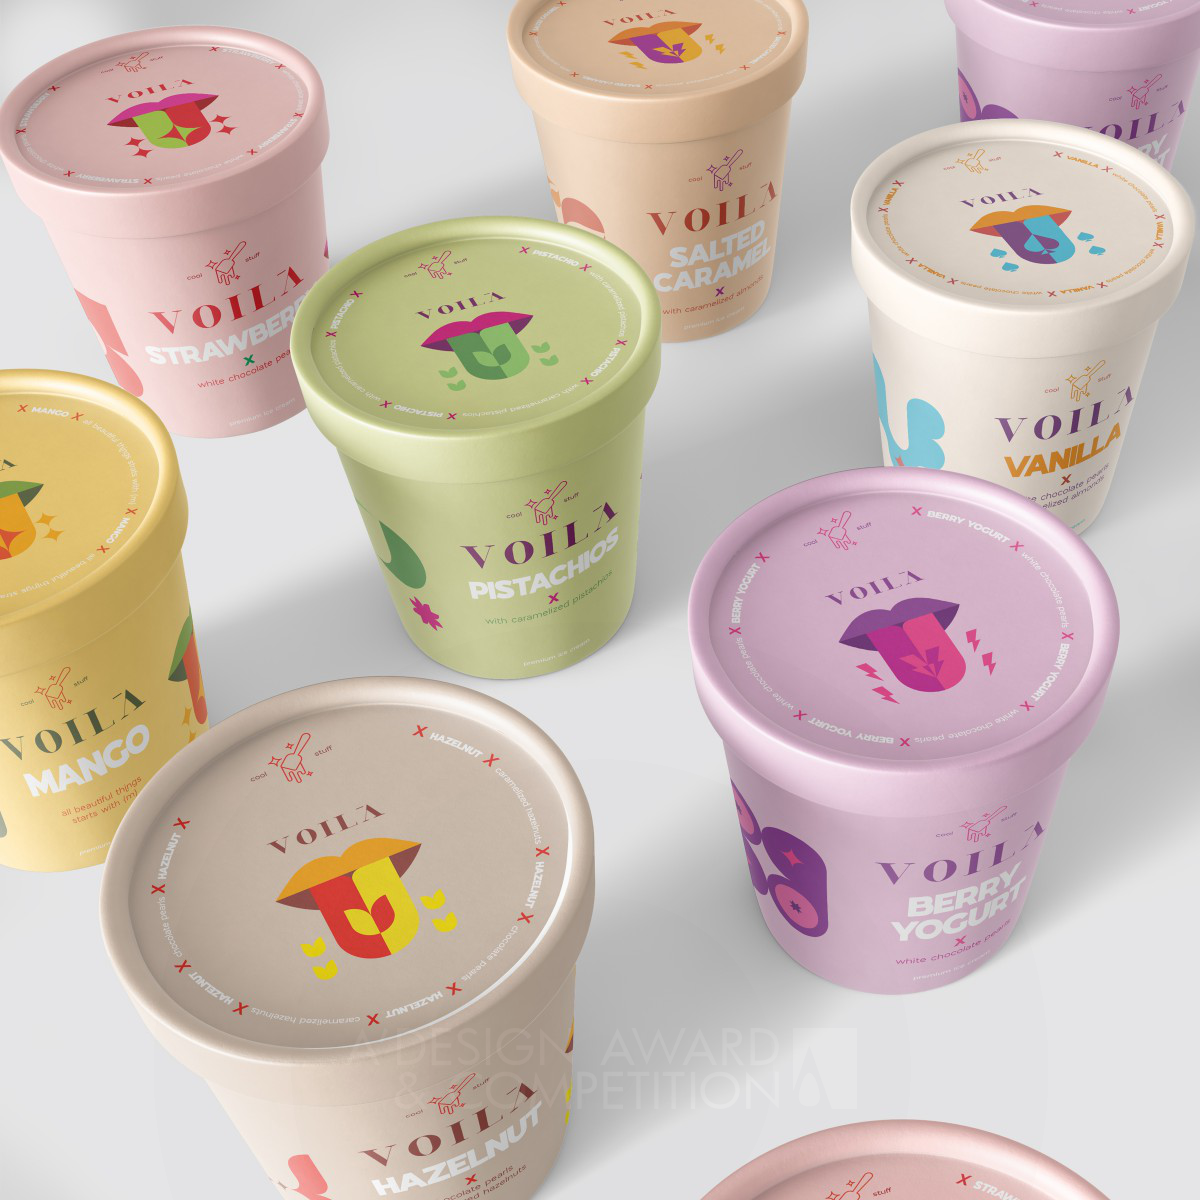 Voila Cool Stuff Ice Cream Packaging